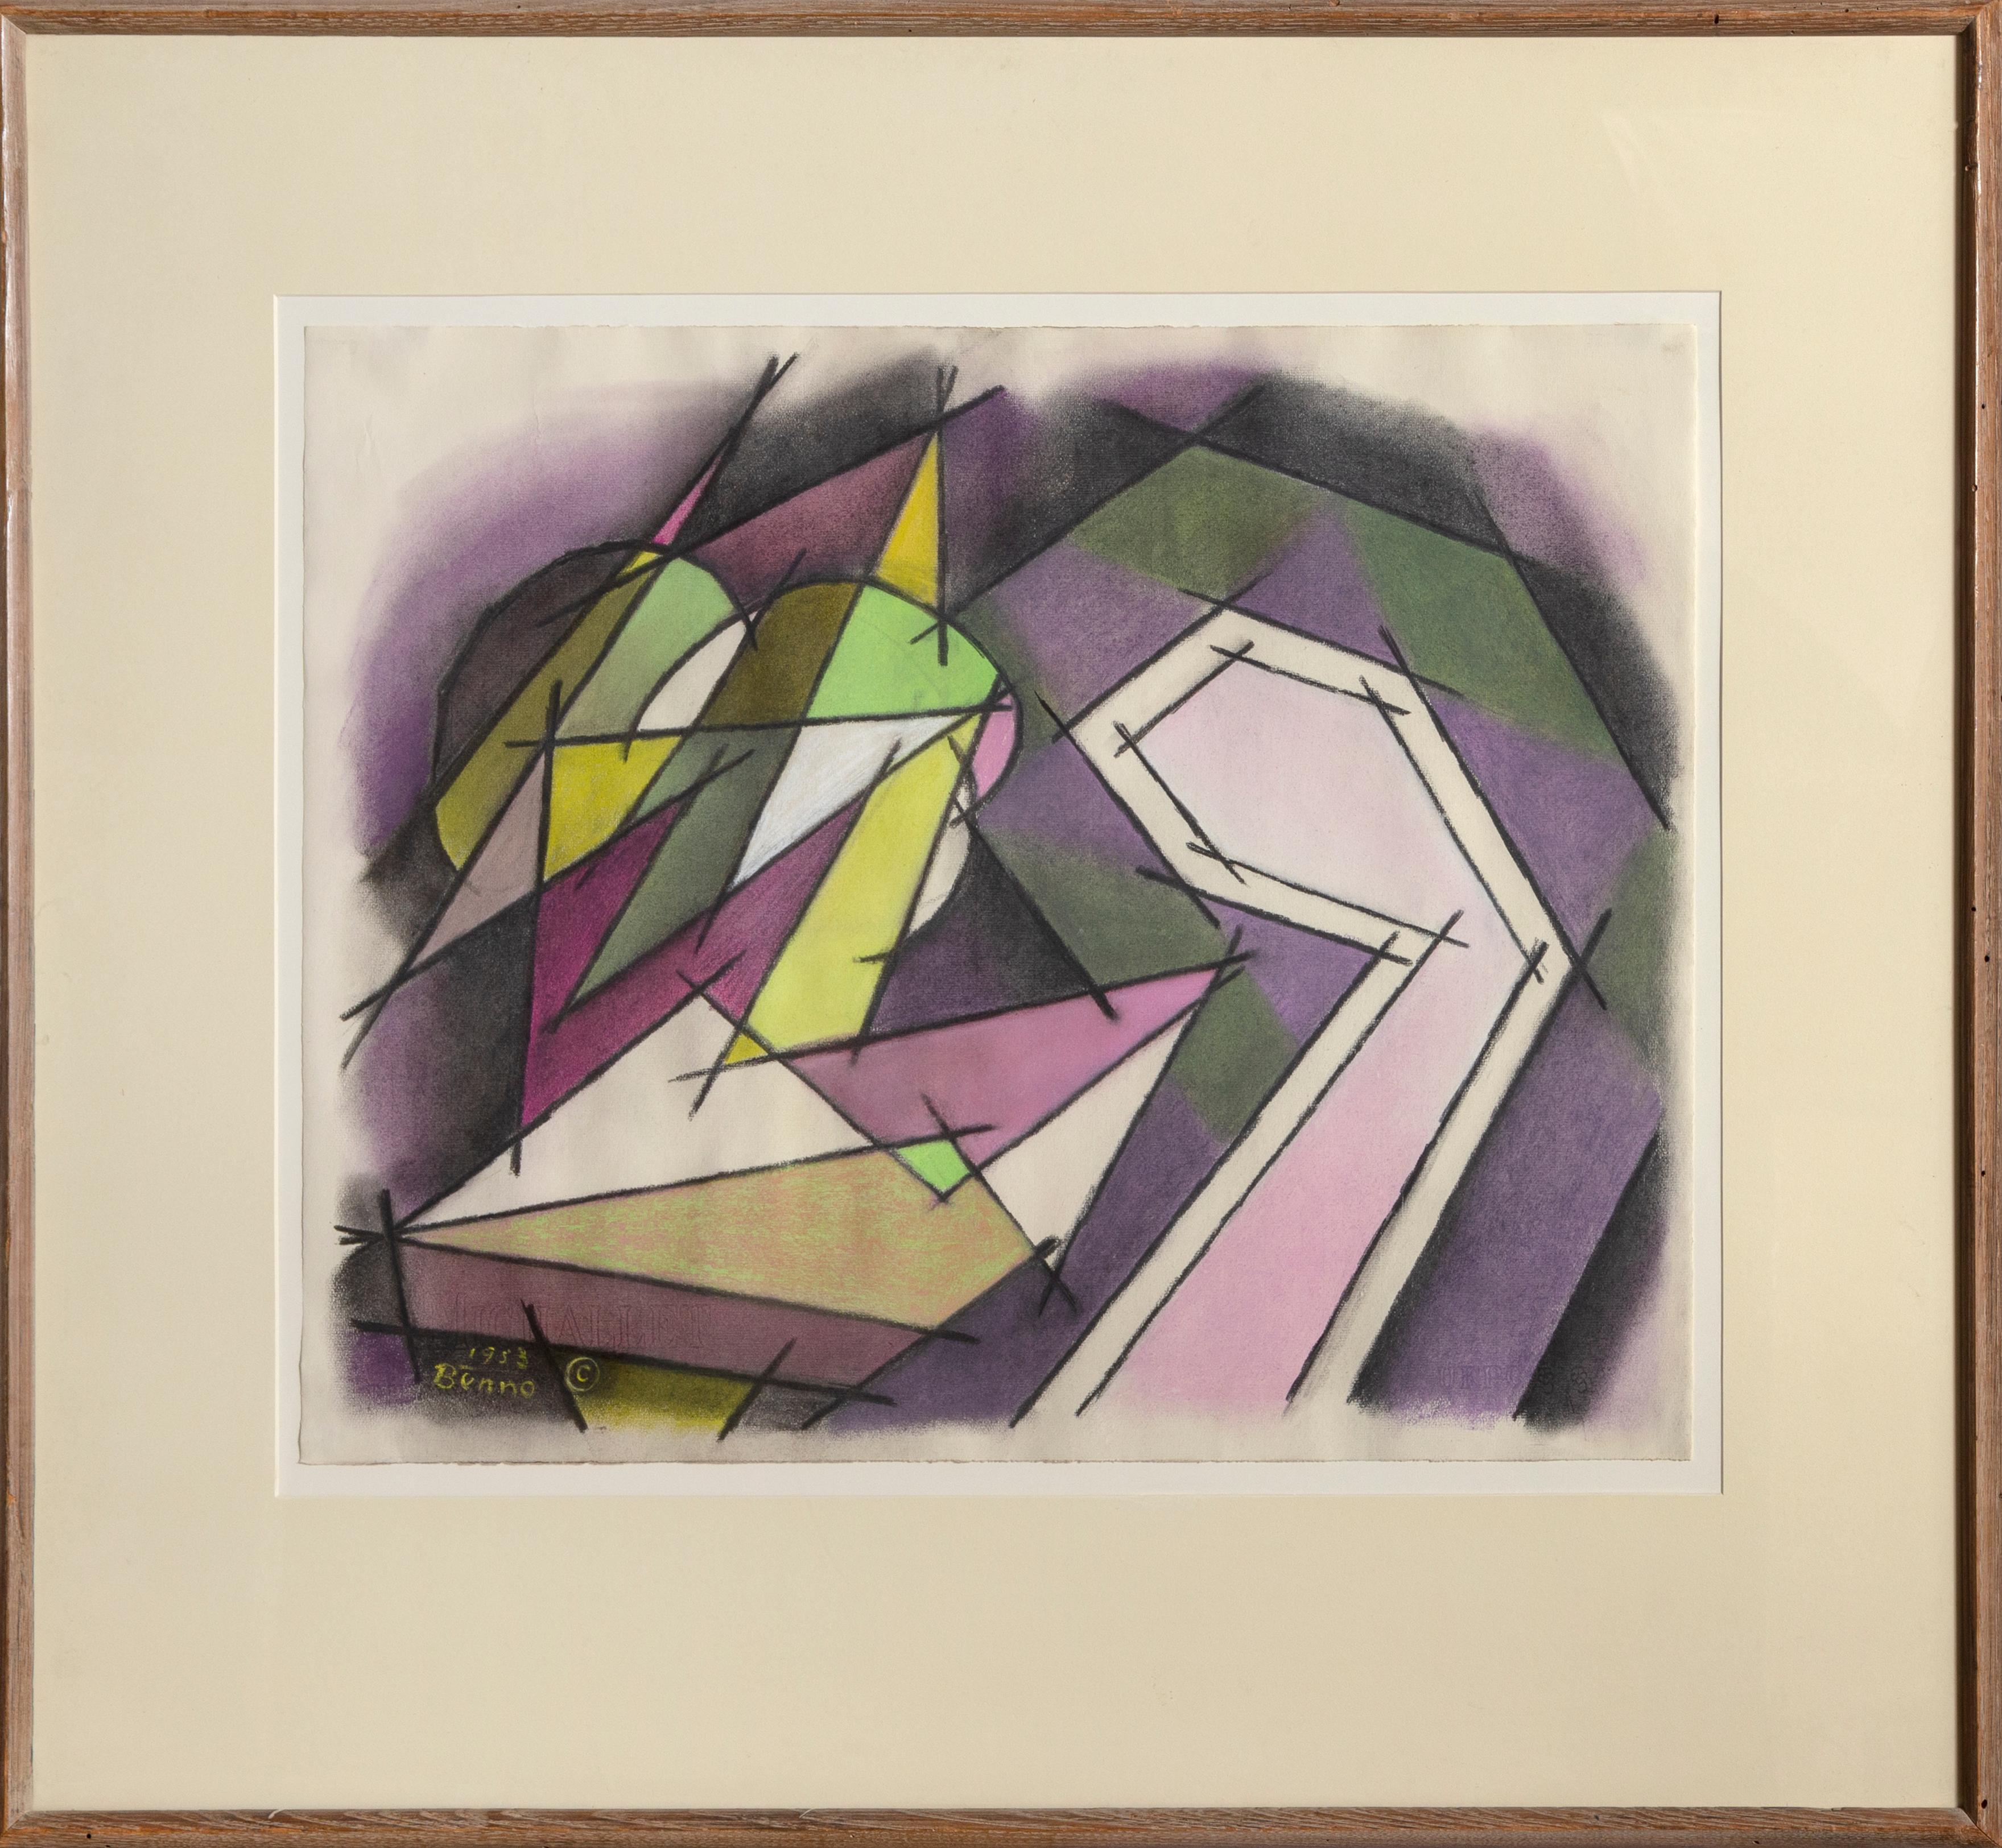 Benjamin G. Benno Abstract Drawing - Still Life with Gray, Green, and Violet Cubist Drawing by Benjamin Benno 1953